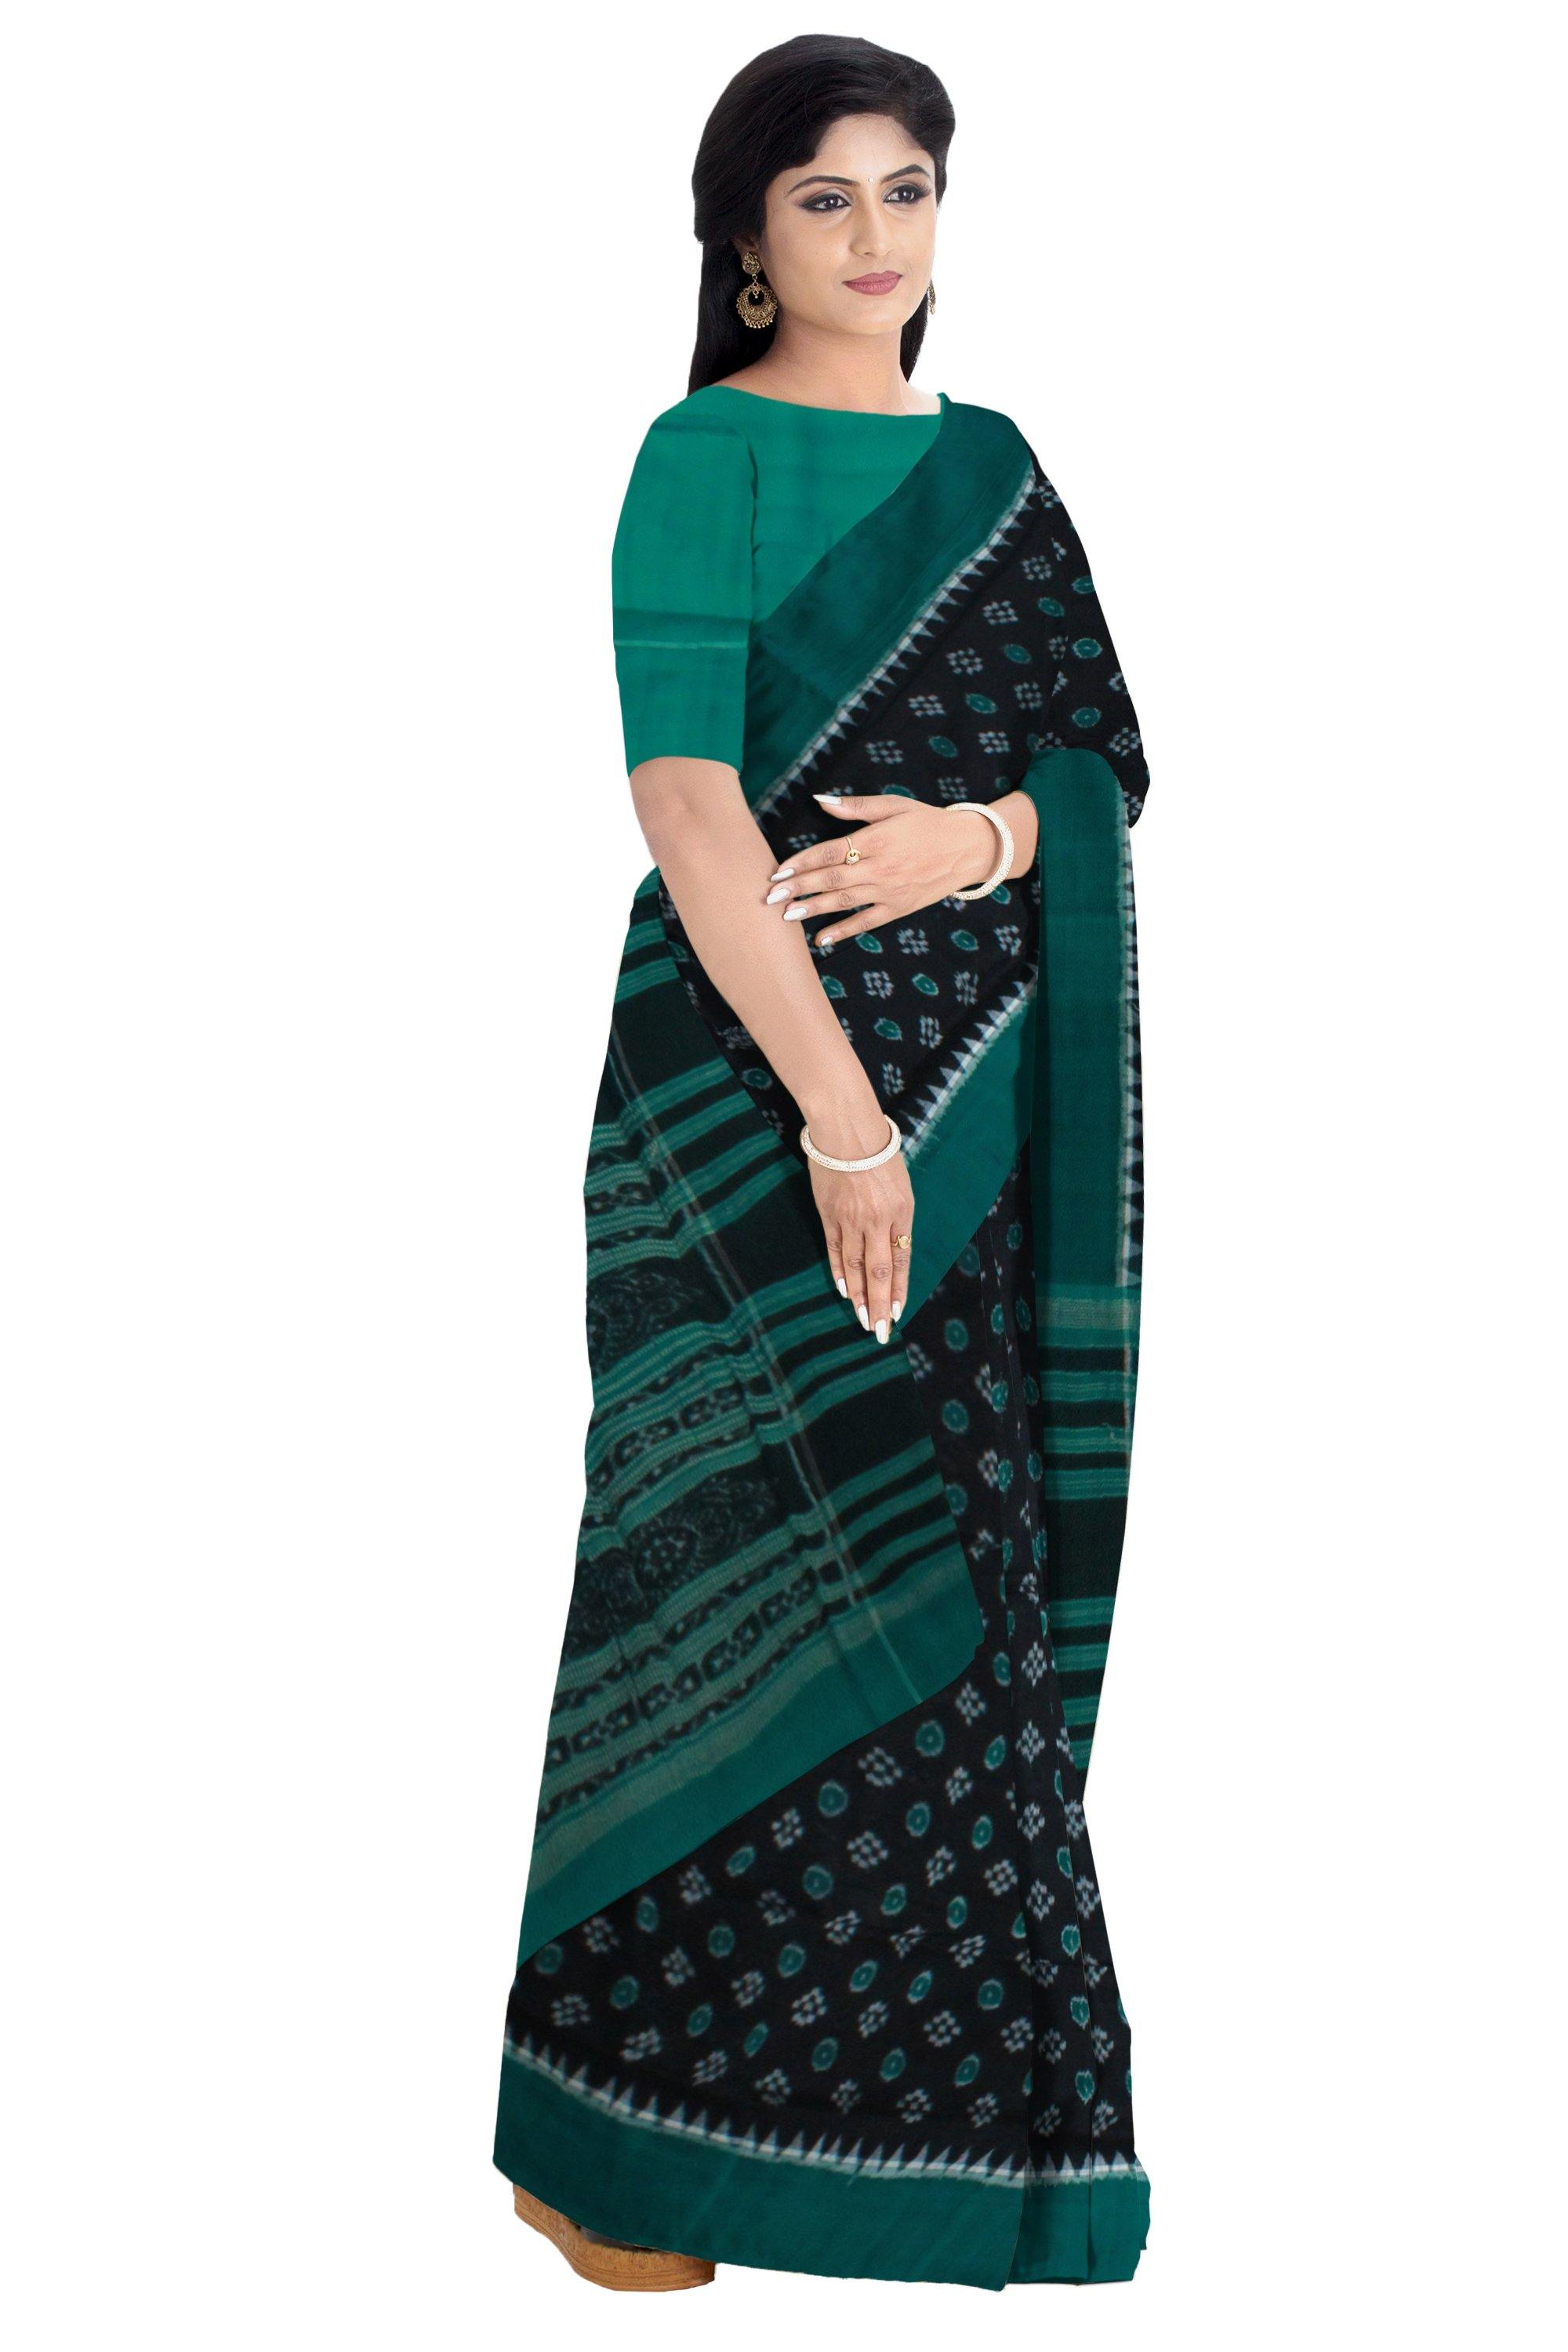 Sambalpuri Handwoven IKAT cotton Saree With plane border in Black and Green Color with Blouse Piece - Koshali Arts & Crafts Enterprise